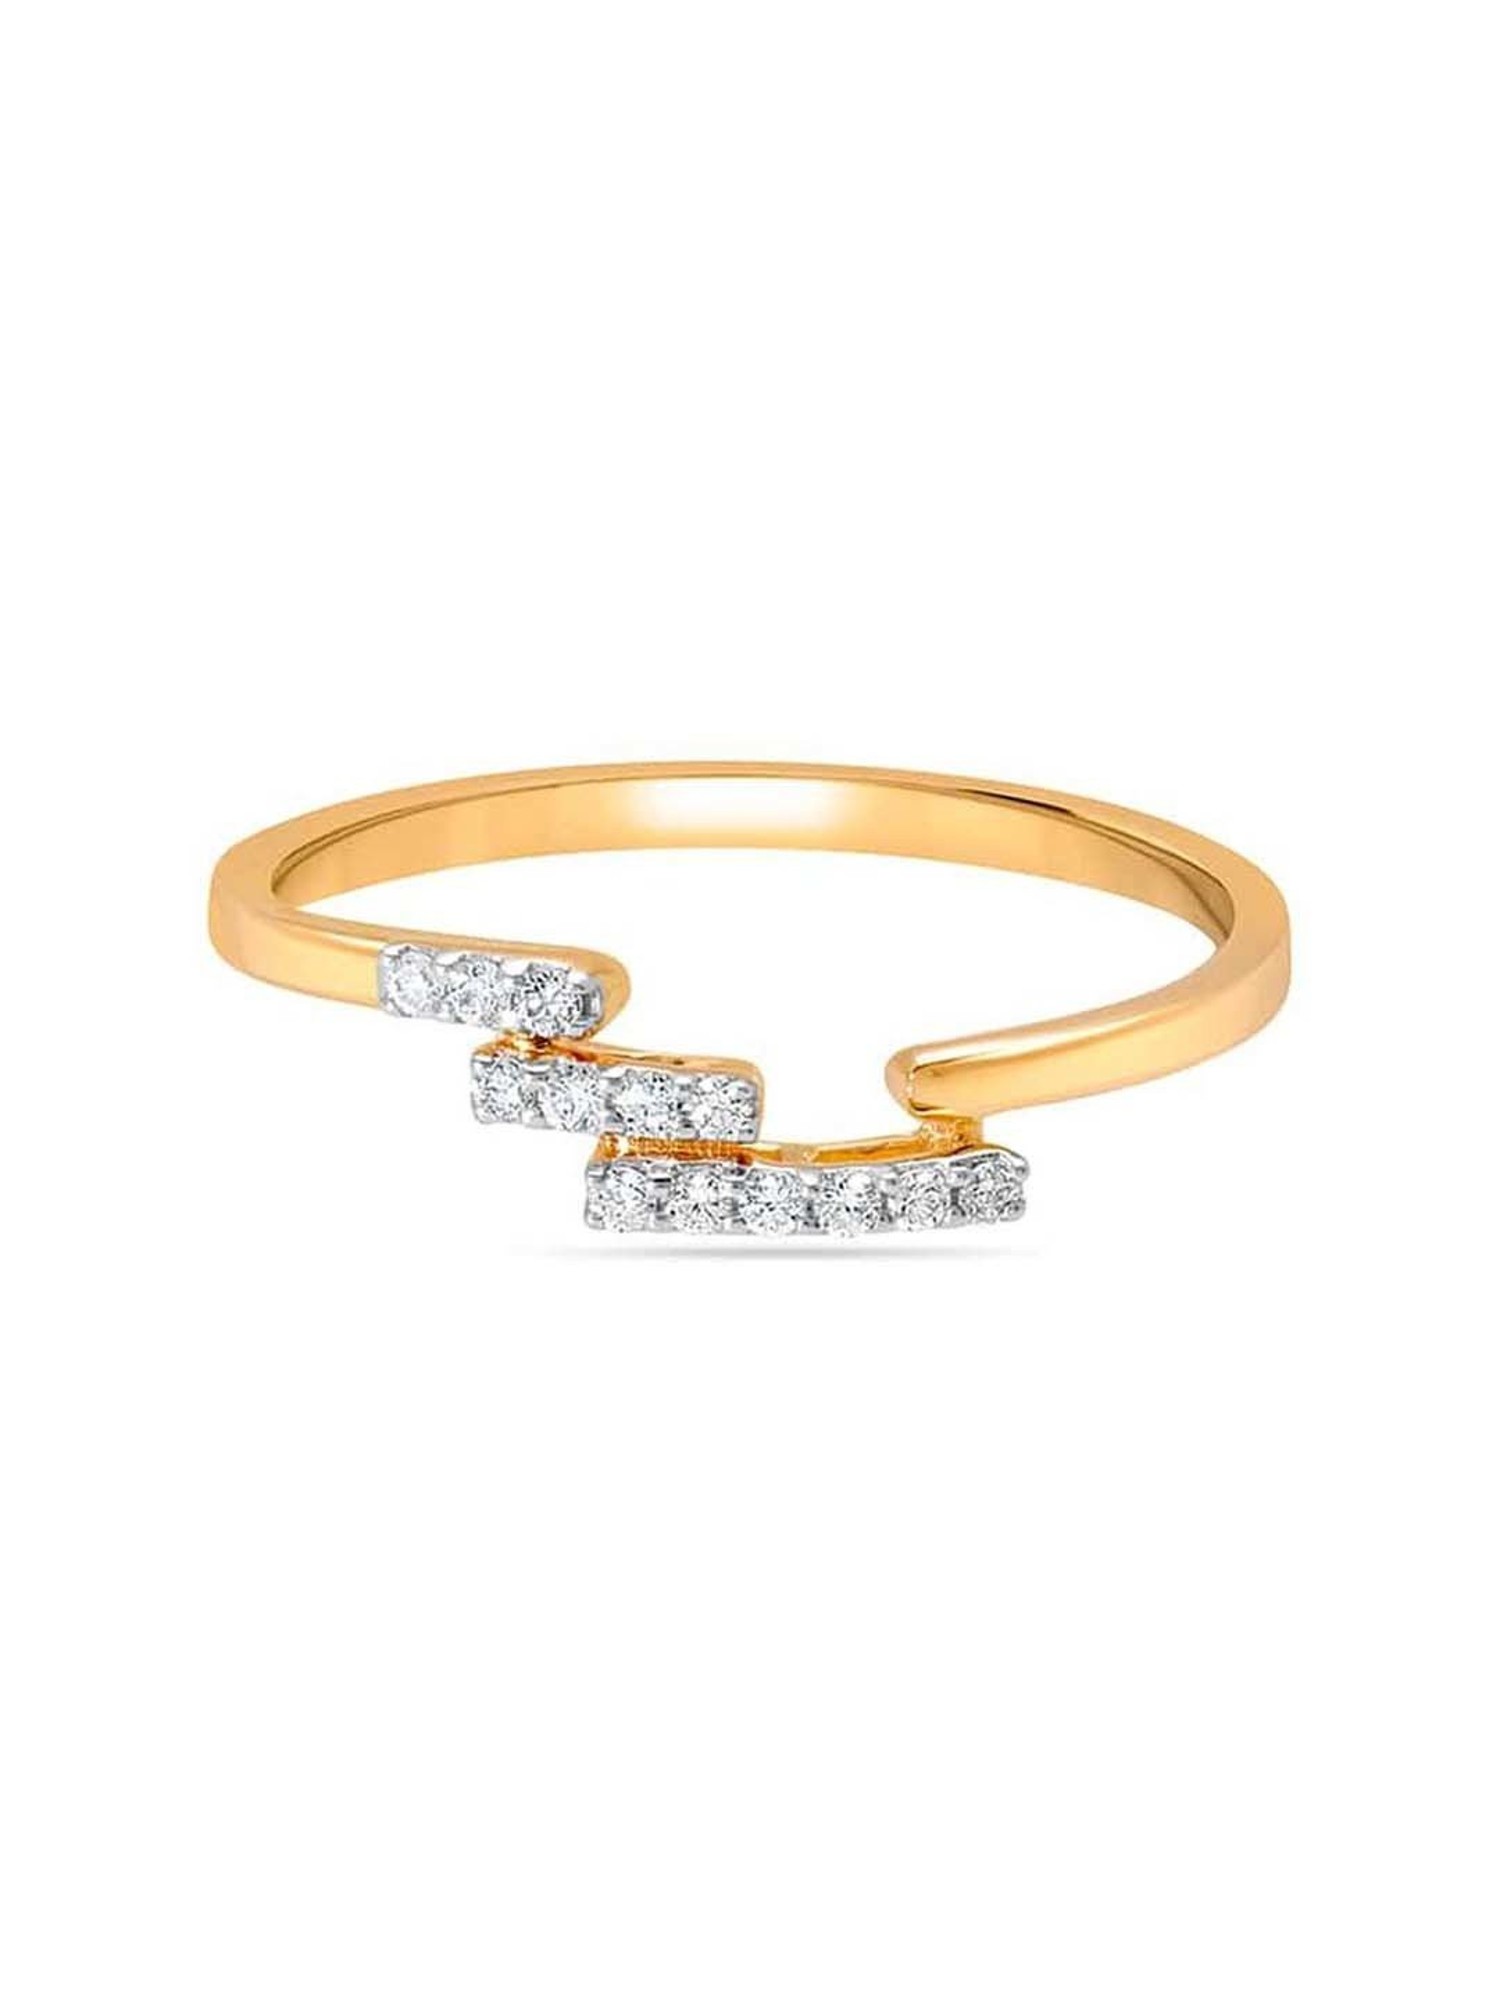 Mia by Tanishq 14 Karat Yellow Gold Spark of Romance Diamond Ring 14kt  Diamond Yellow Gold ring Price in India - Buy Mia by Tanishq 14 Karat  Yellow Gold Spark of Romance